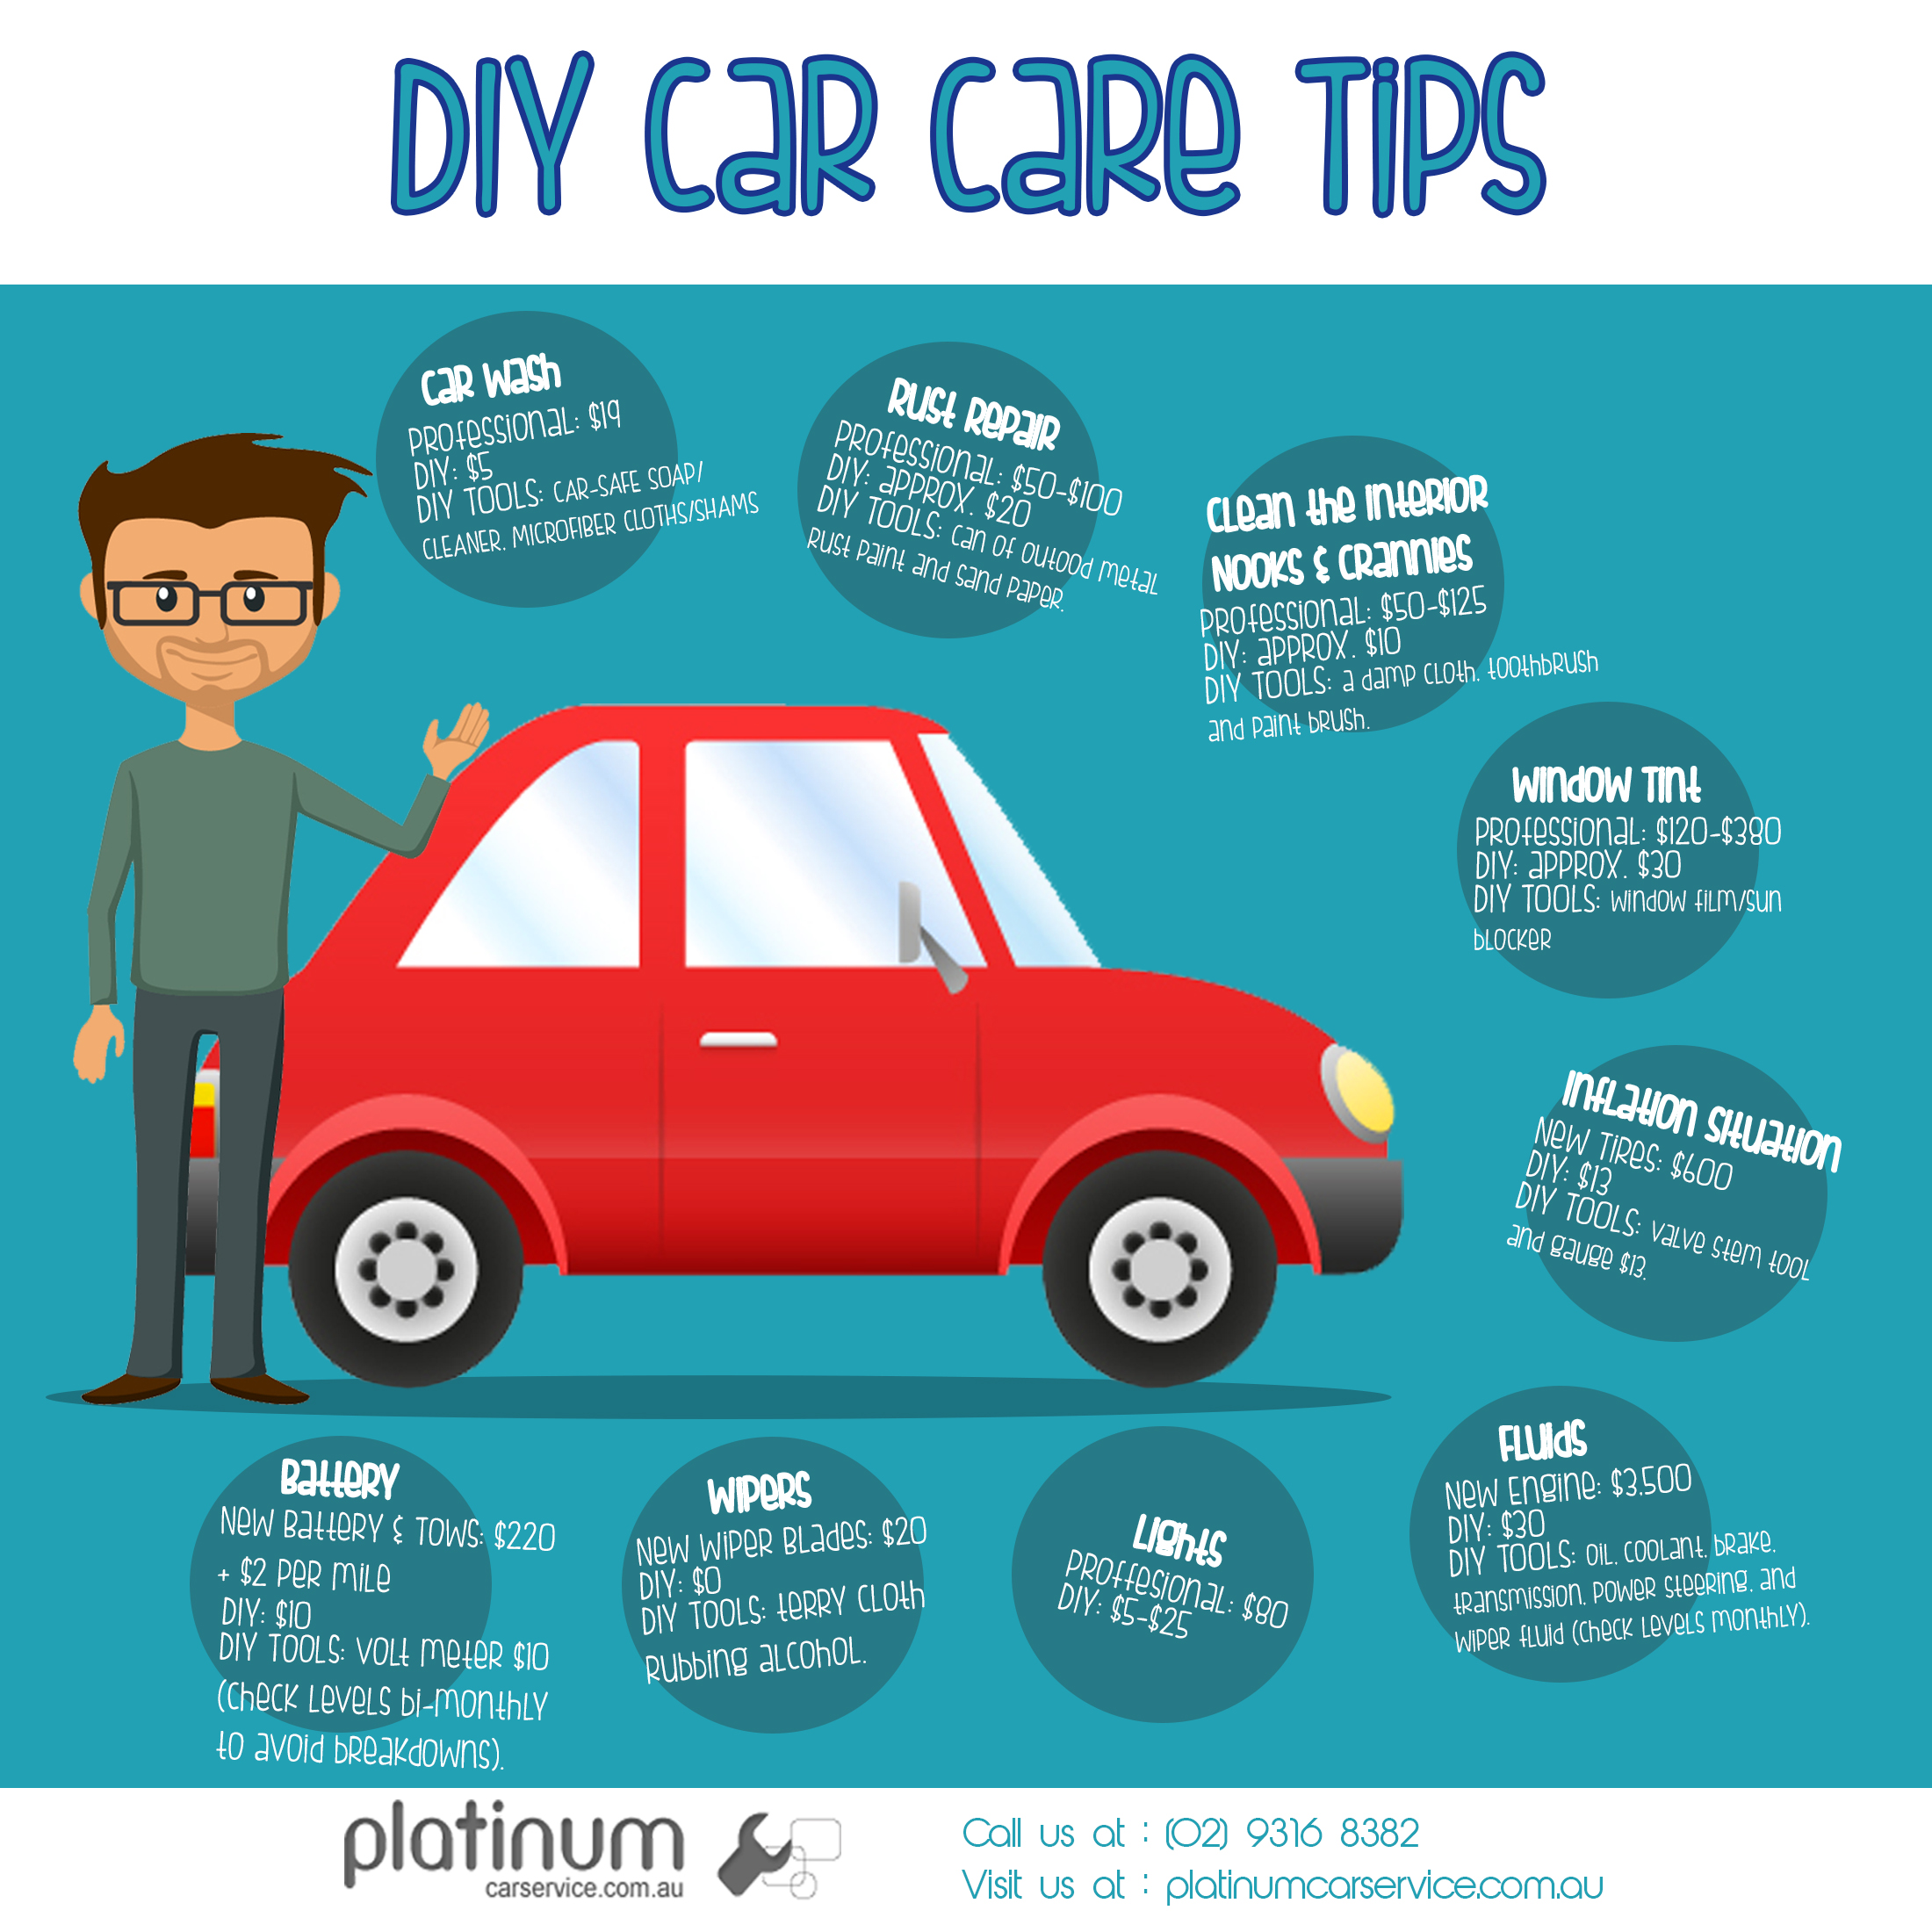 DIY Car Carpet Cleaner in 10 Steps